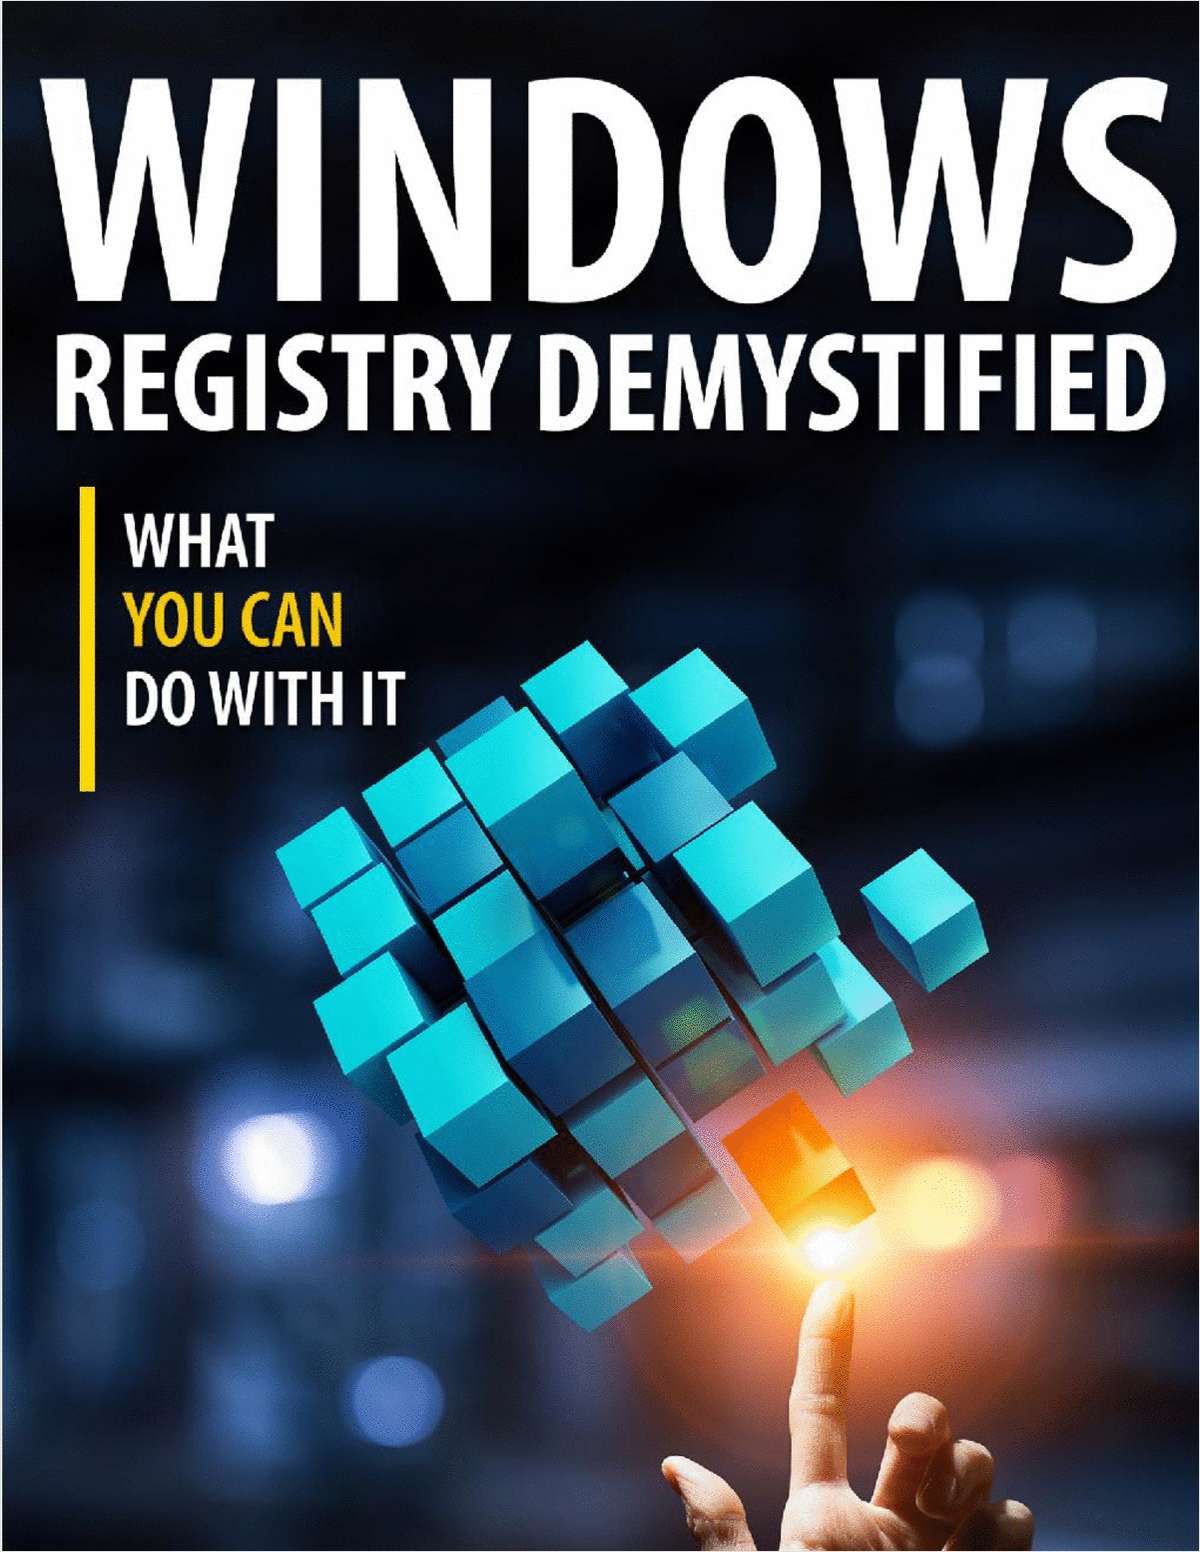 Windows Registry Demistified